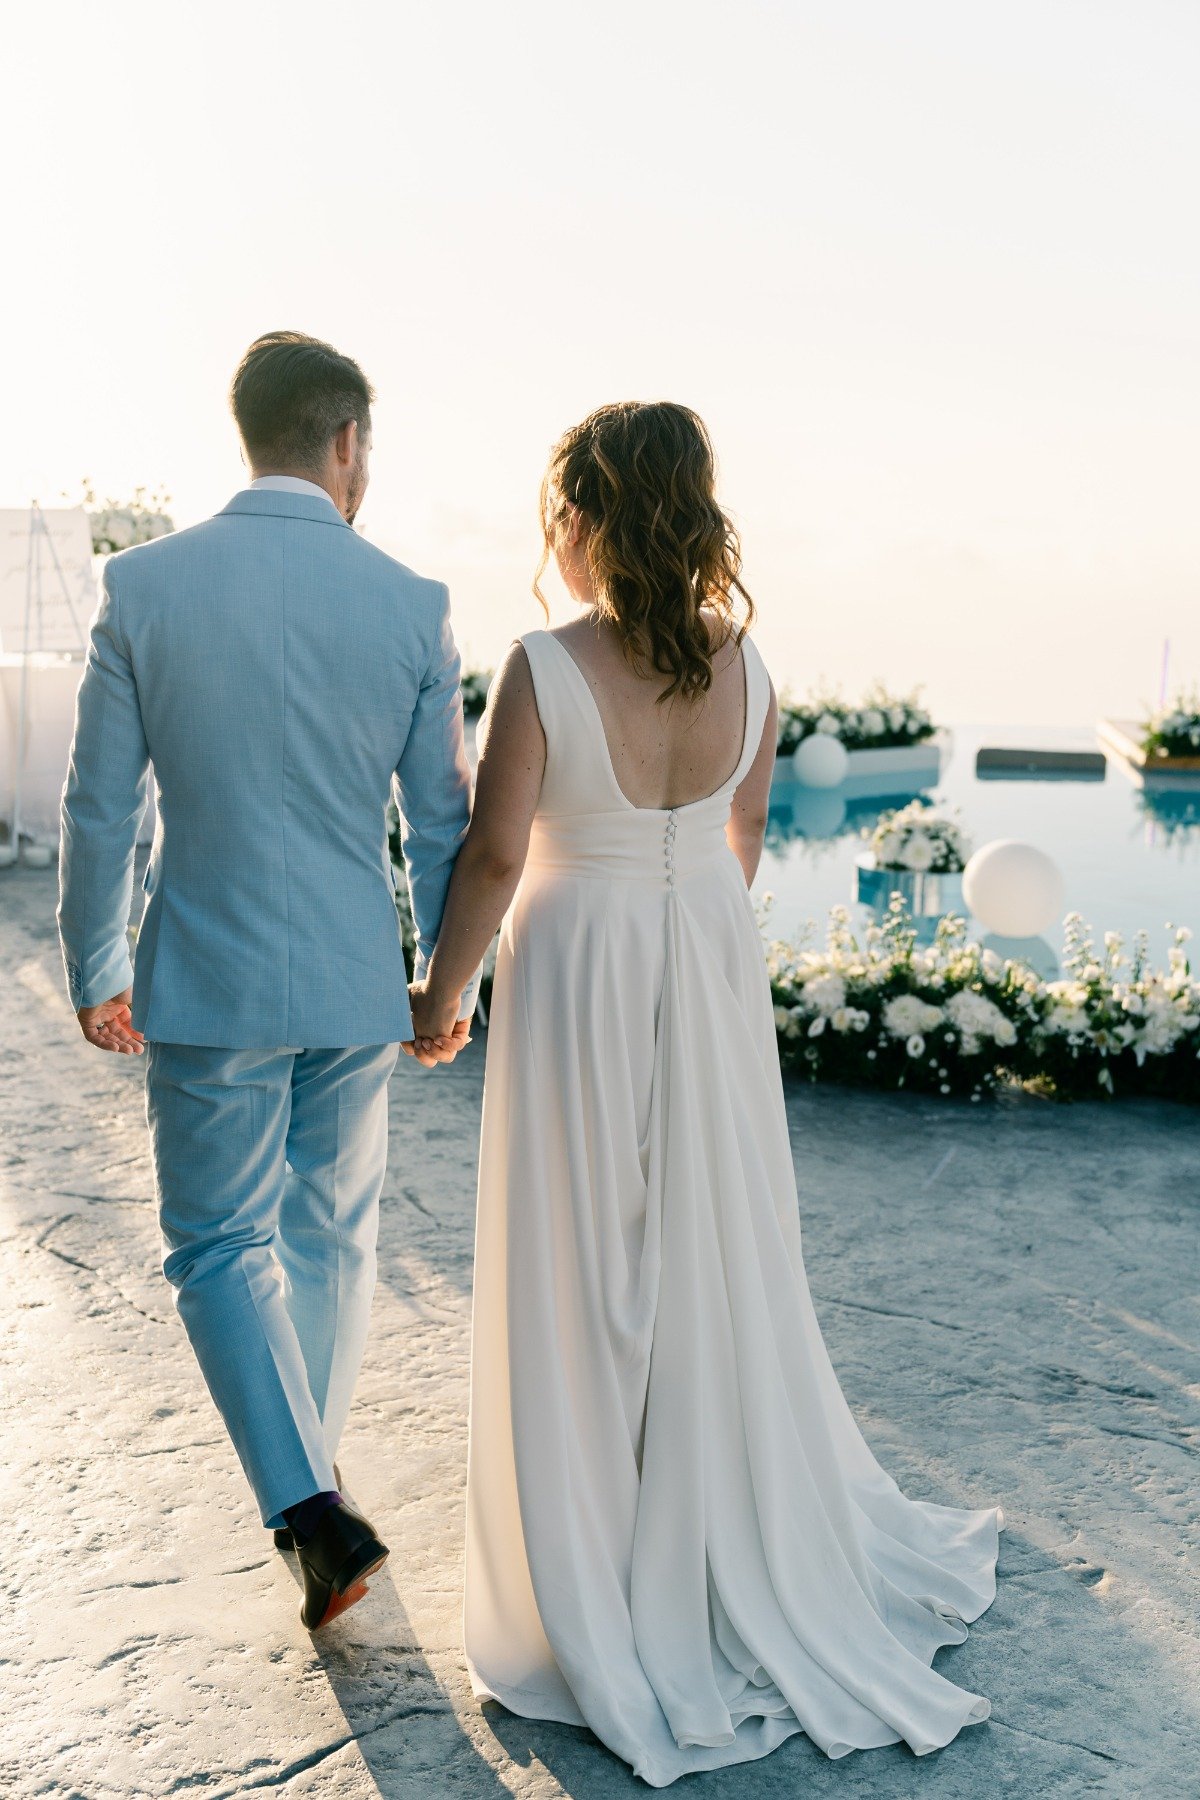 Greek bride and groom walking to reception at island wedding